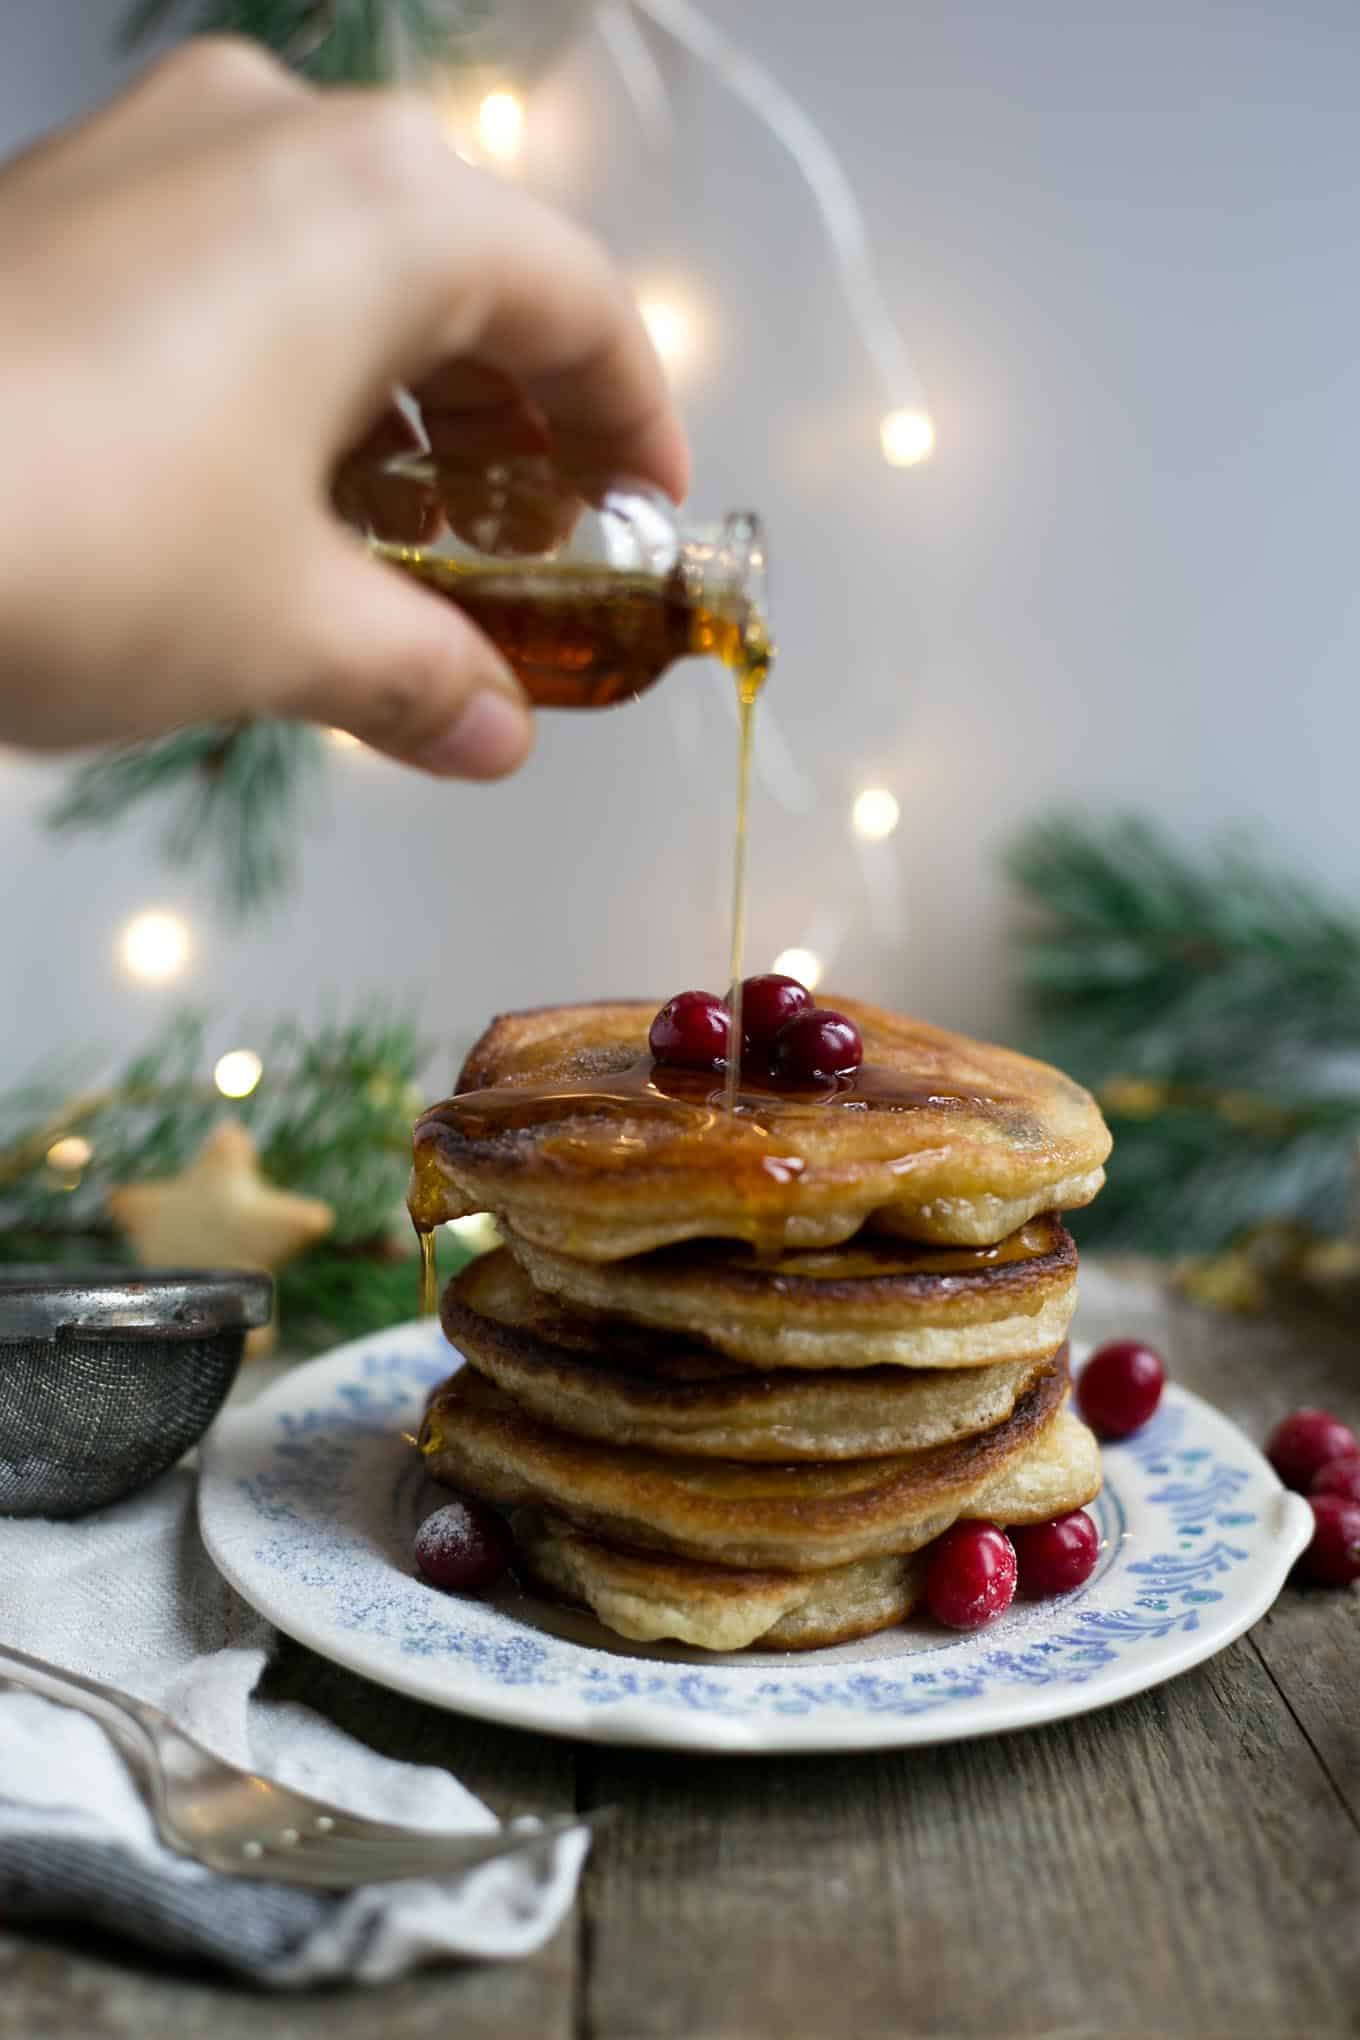 Rum & raisin pancakes, ultimate breakfast for #Christmas morning! #vegan #dairyfree #pancakes | via @annabanana.co